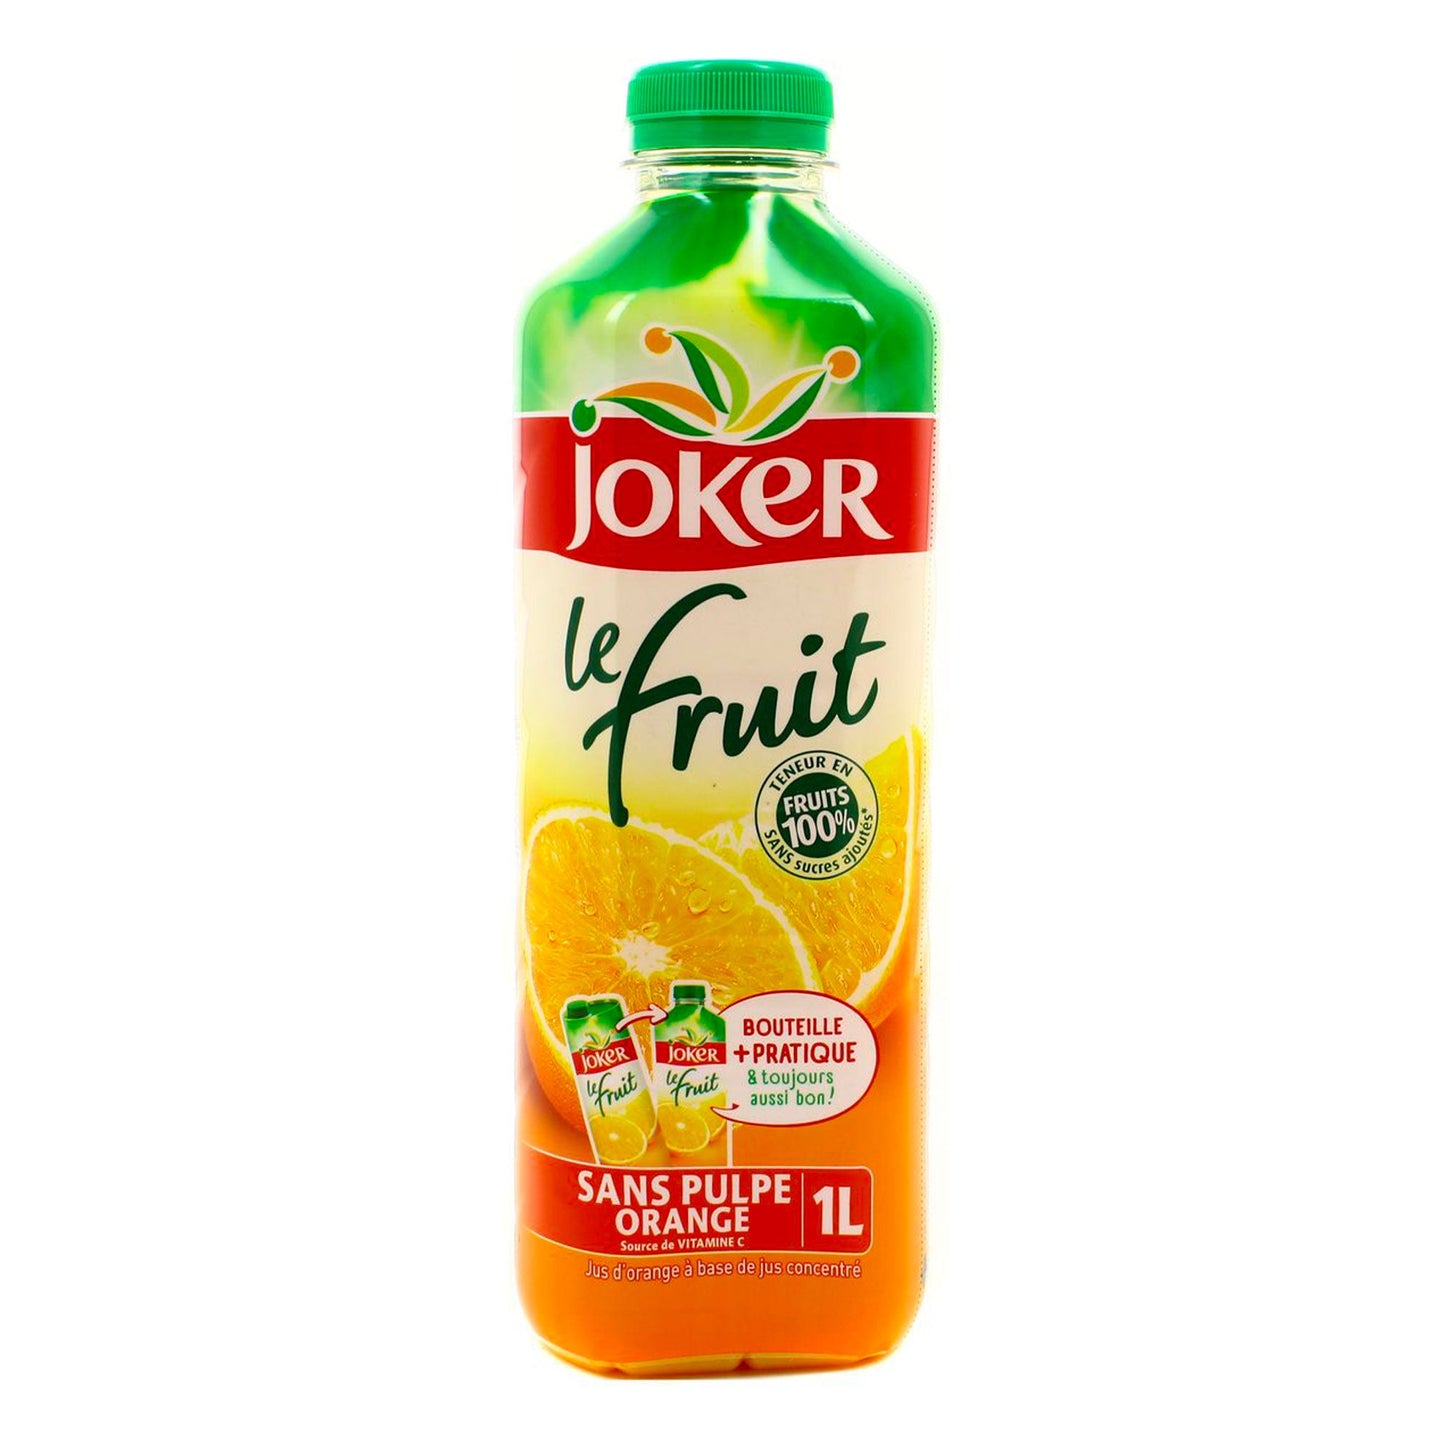 JUS D'ORANGE SANS PULPE 100% FRUITS JOKER